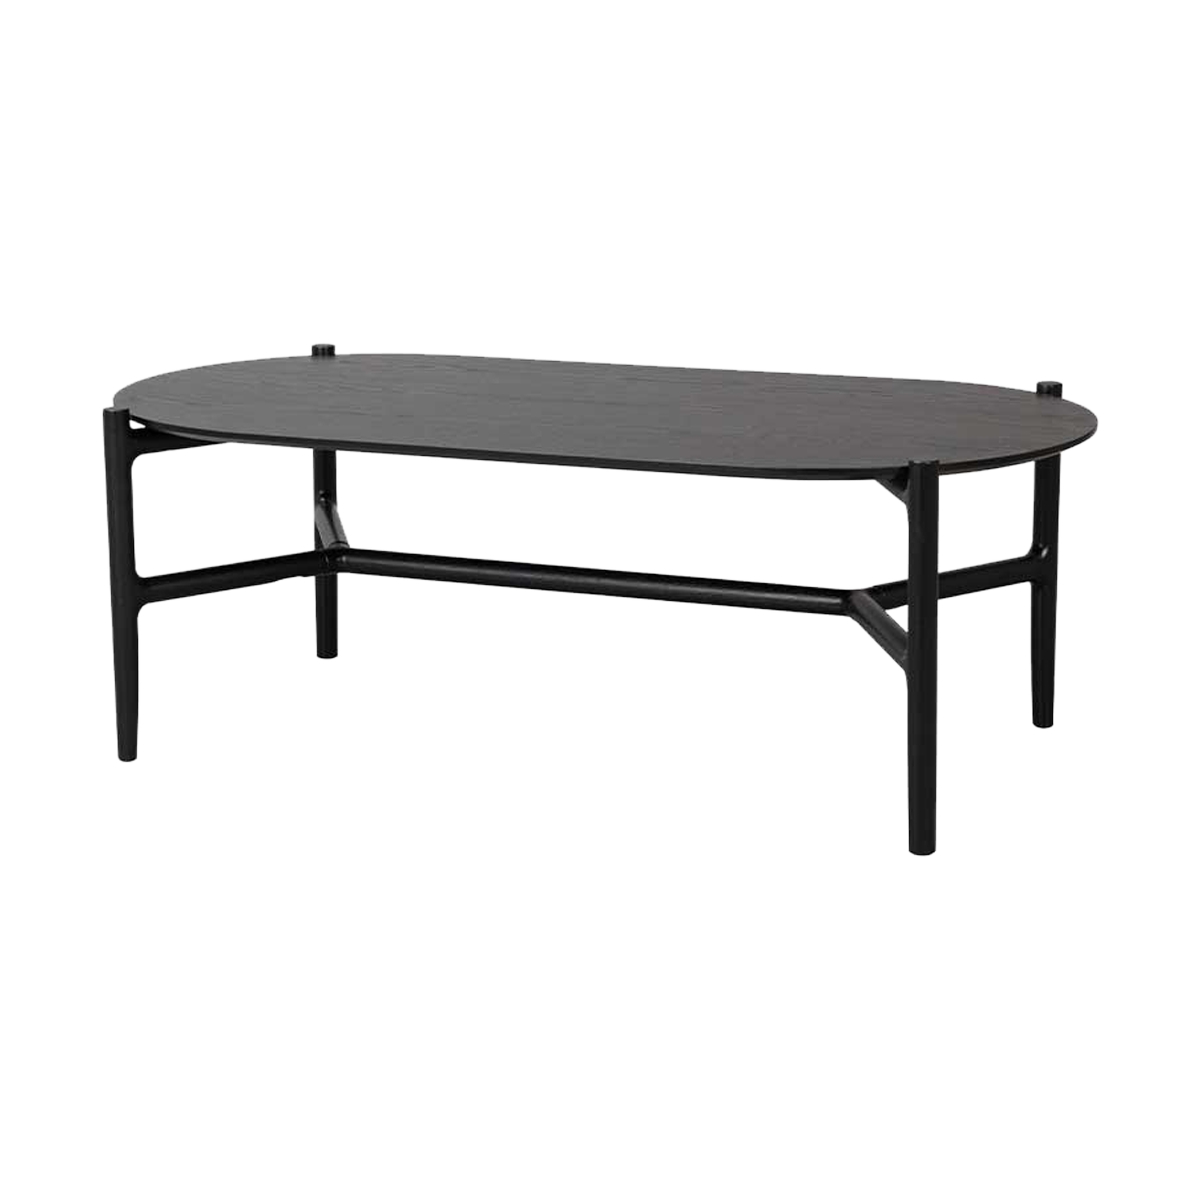 Holton houten salontafel zwart - 130 x 65 cm